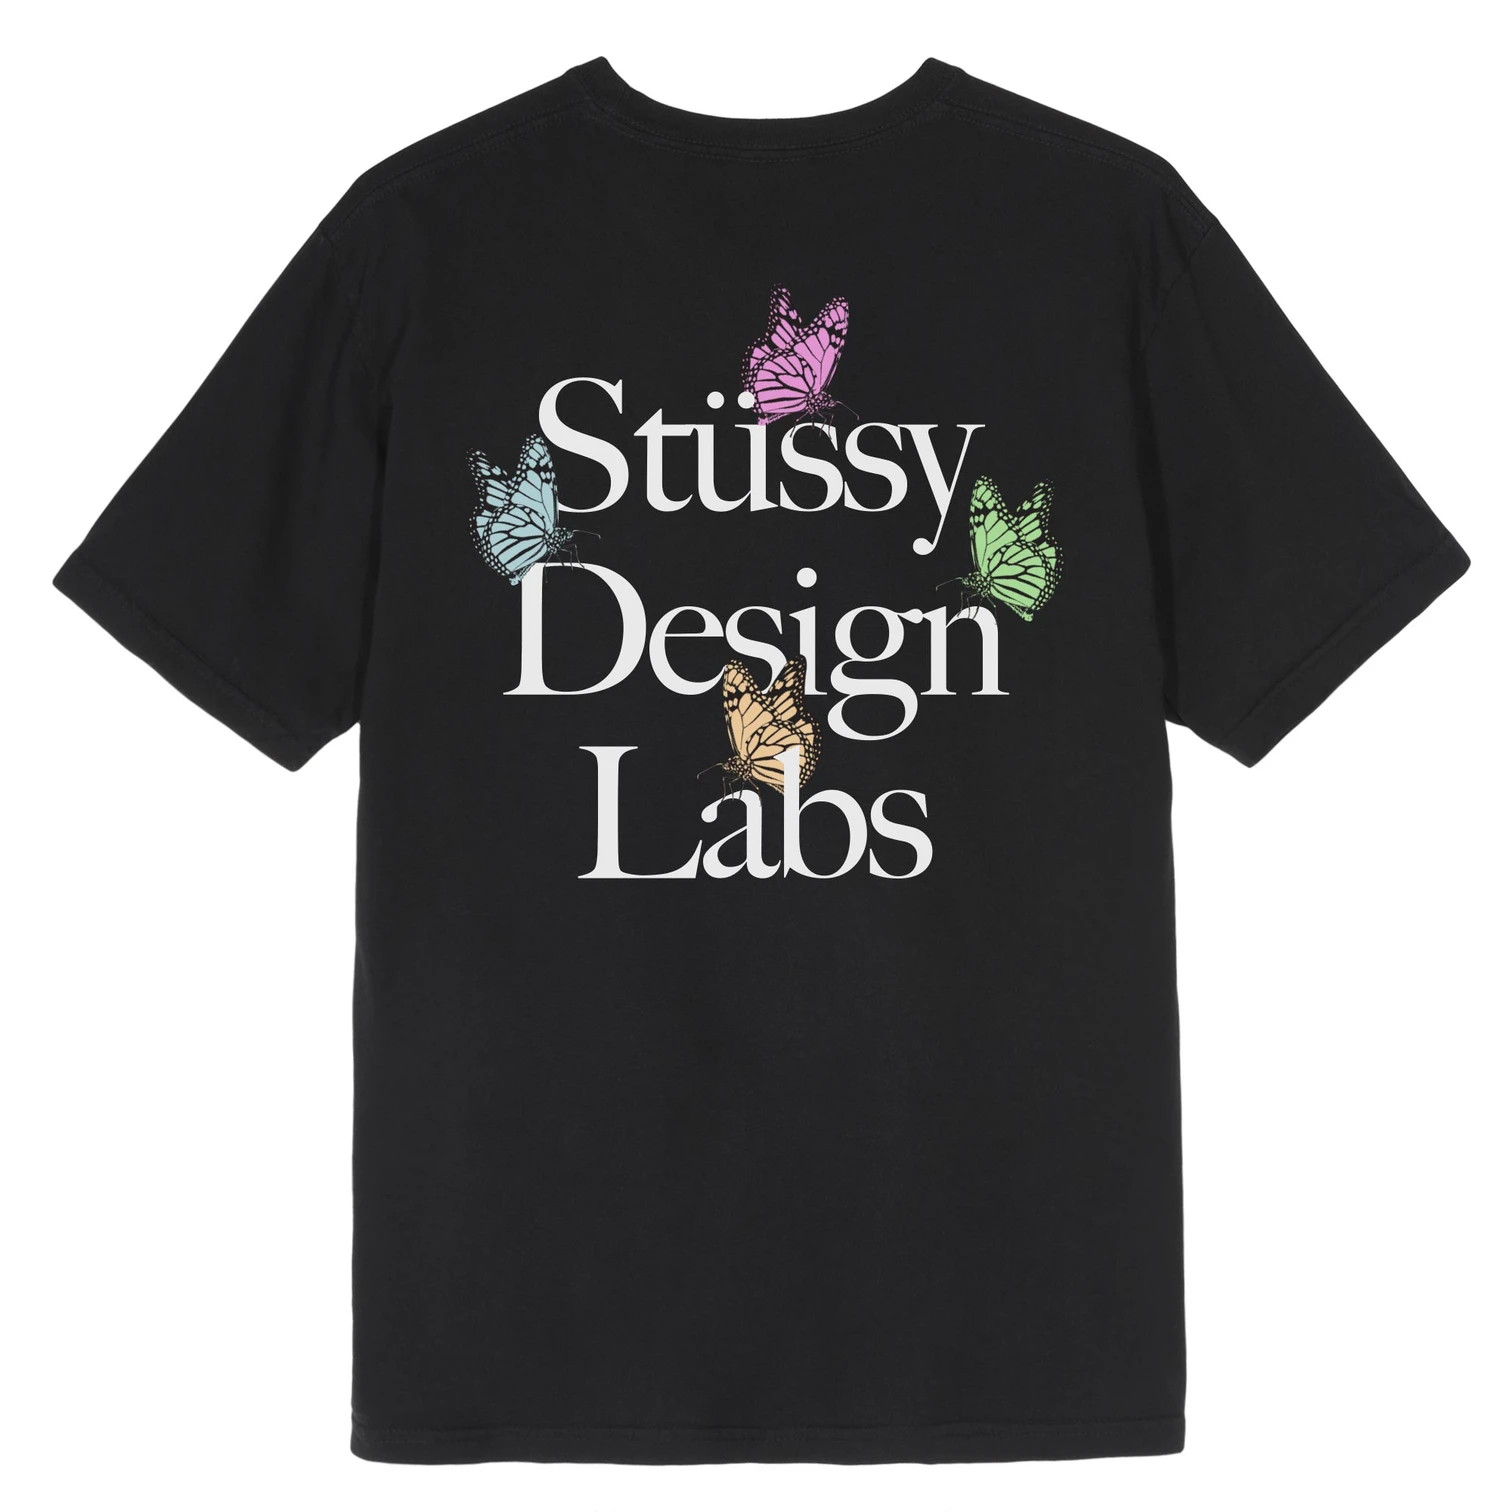 Stussy Design Labs Tee black stampa farfalle